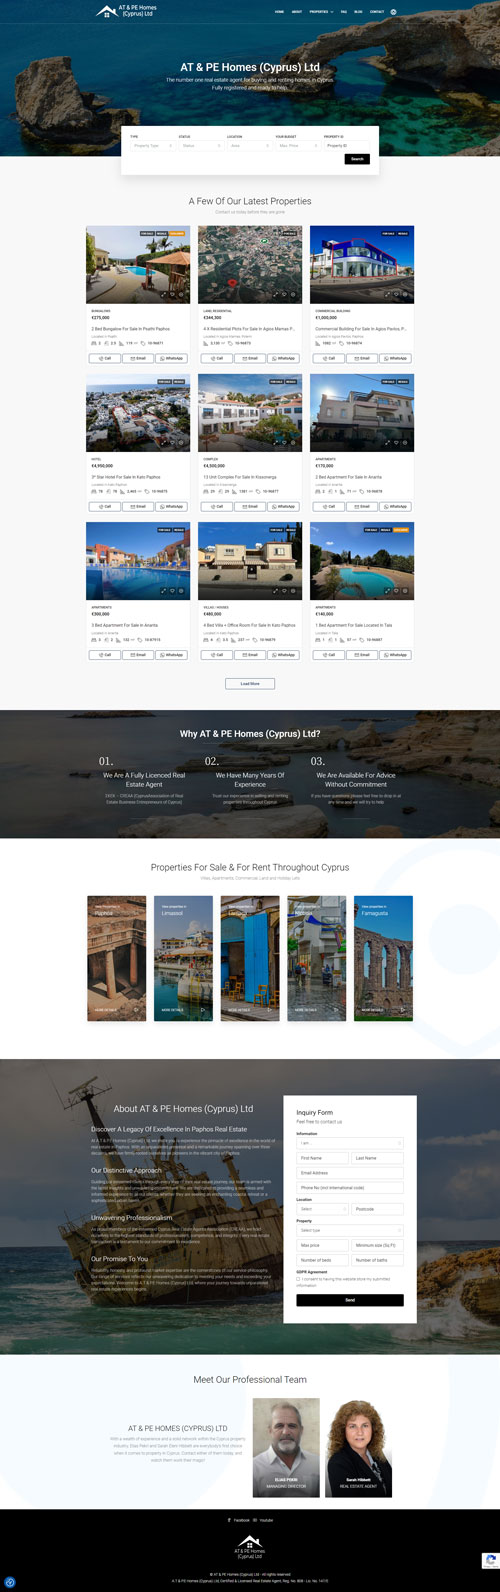 Paphos Web Design - New website for ATPE Homes Cyprus - Home Page